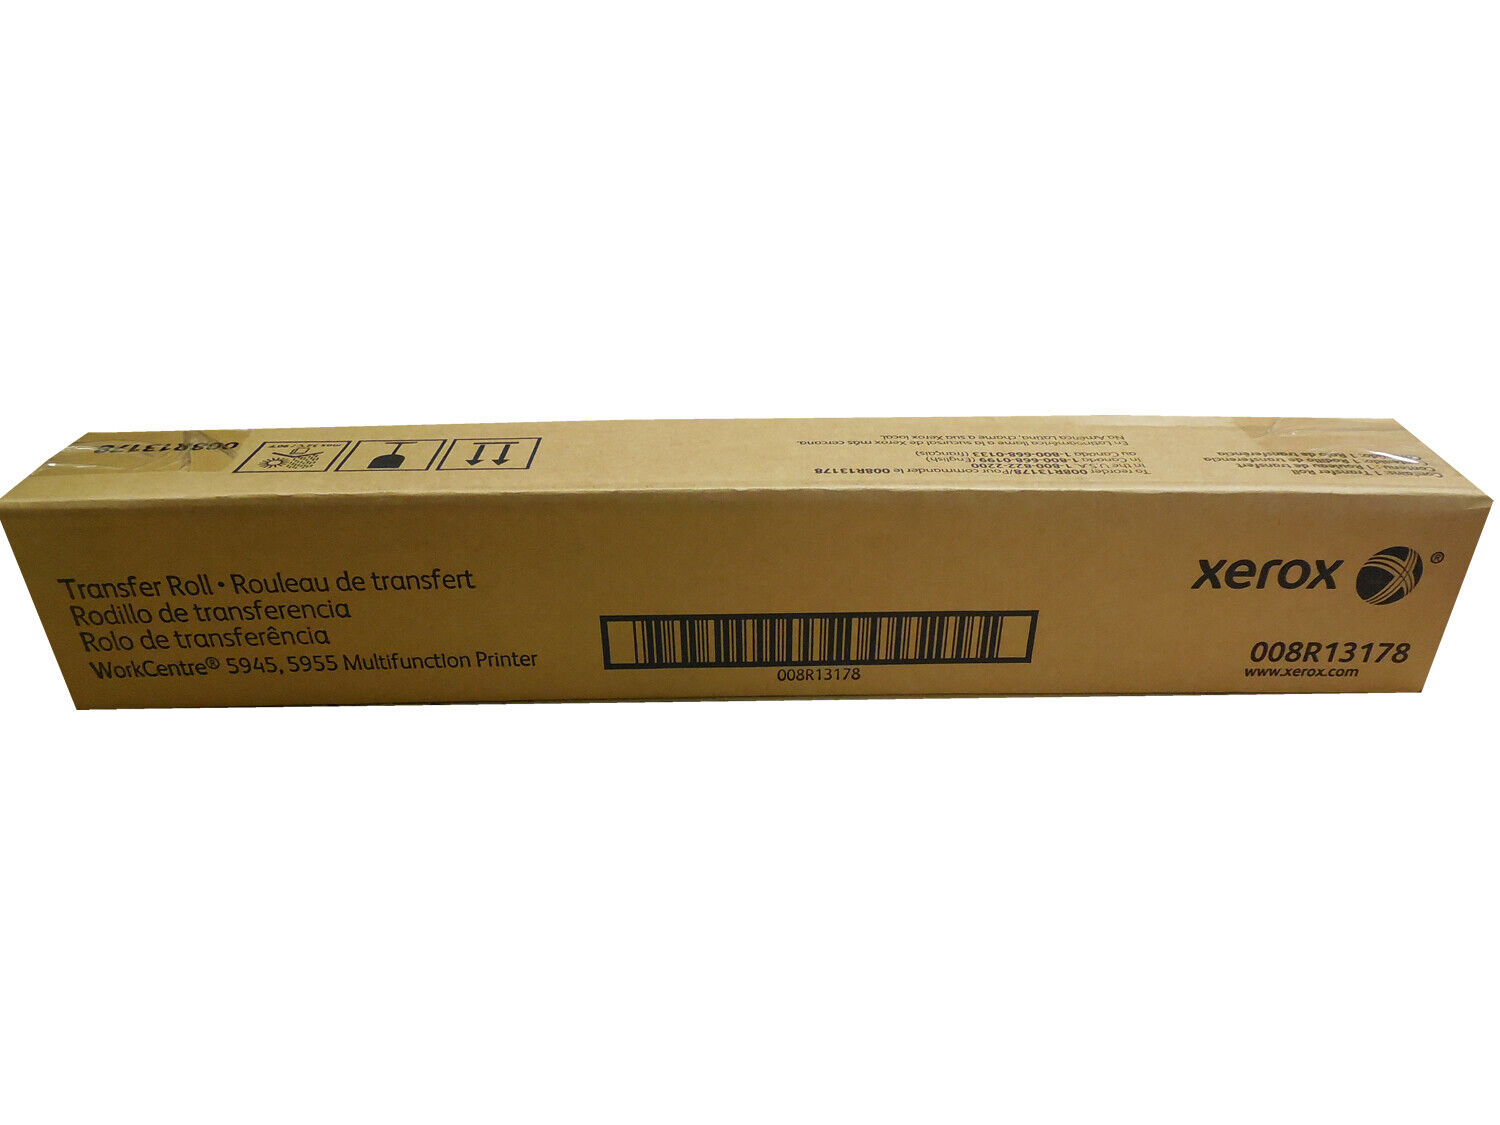 XEROX 008R13178 (8R13178) Transfer Roll Genuine OEM Original